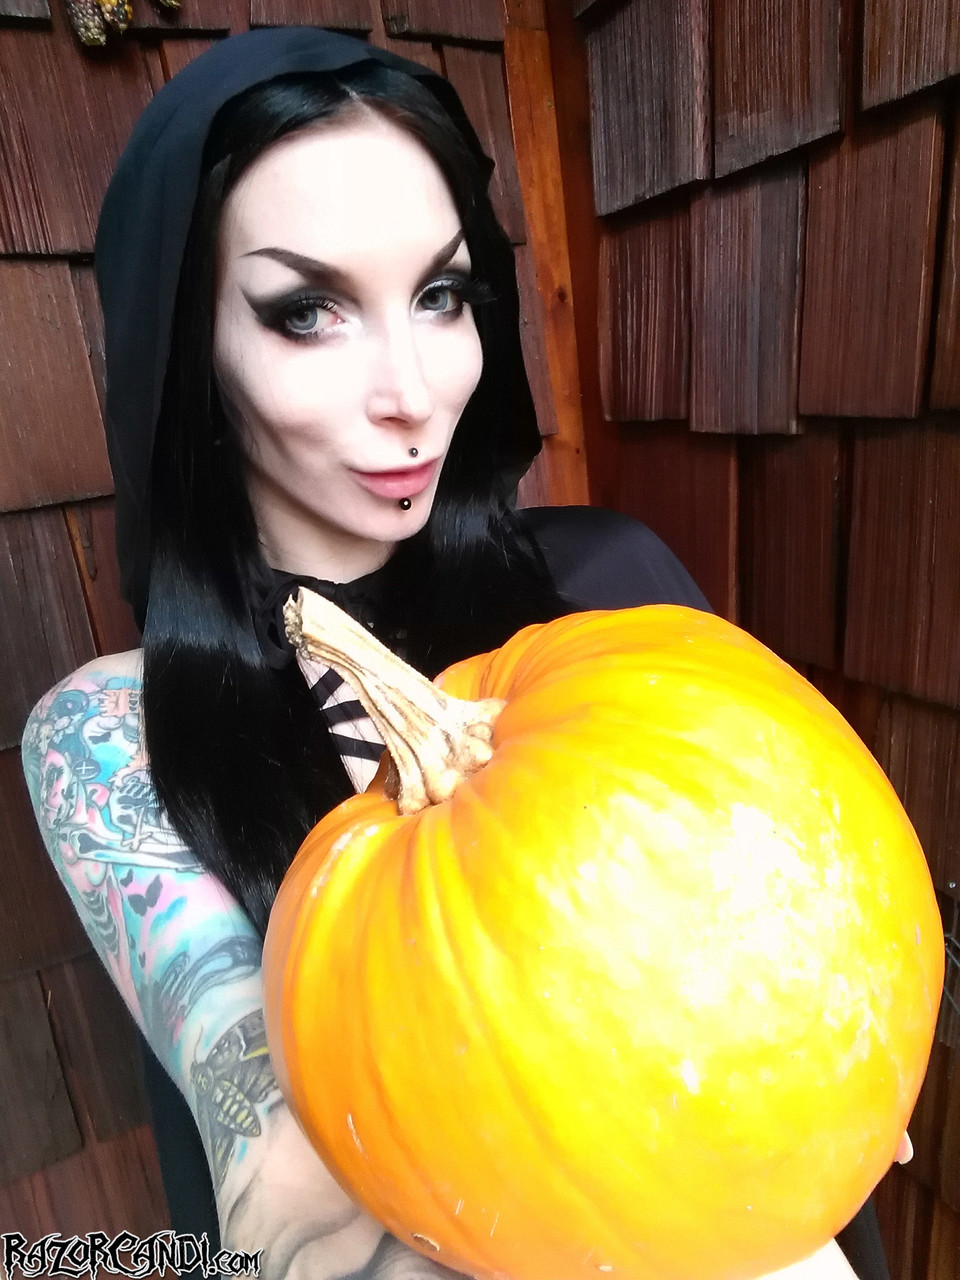 Goth girl Razor Candi flaunts her big ass over a pumpkin in Halloween attire porn photo #427655339 | Razor Candi Pics, Razor Candi, MILF, mobile porn